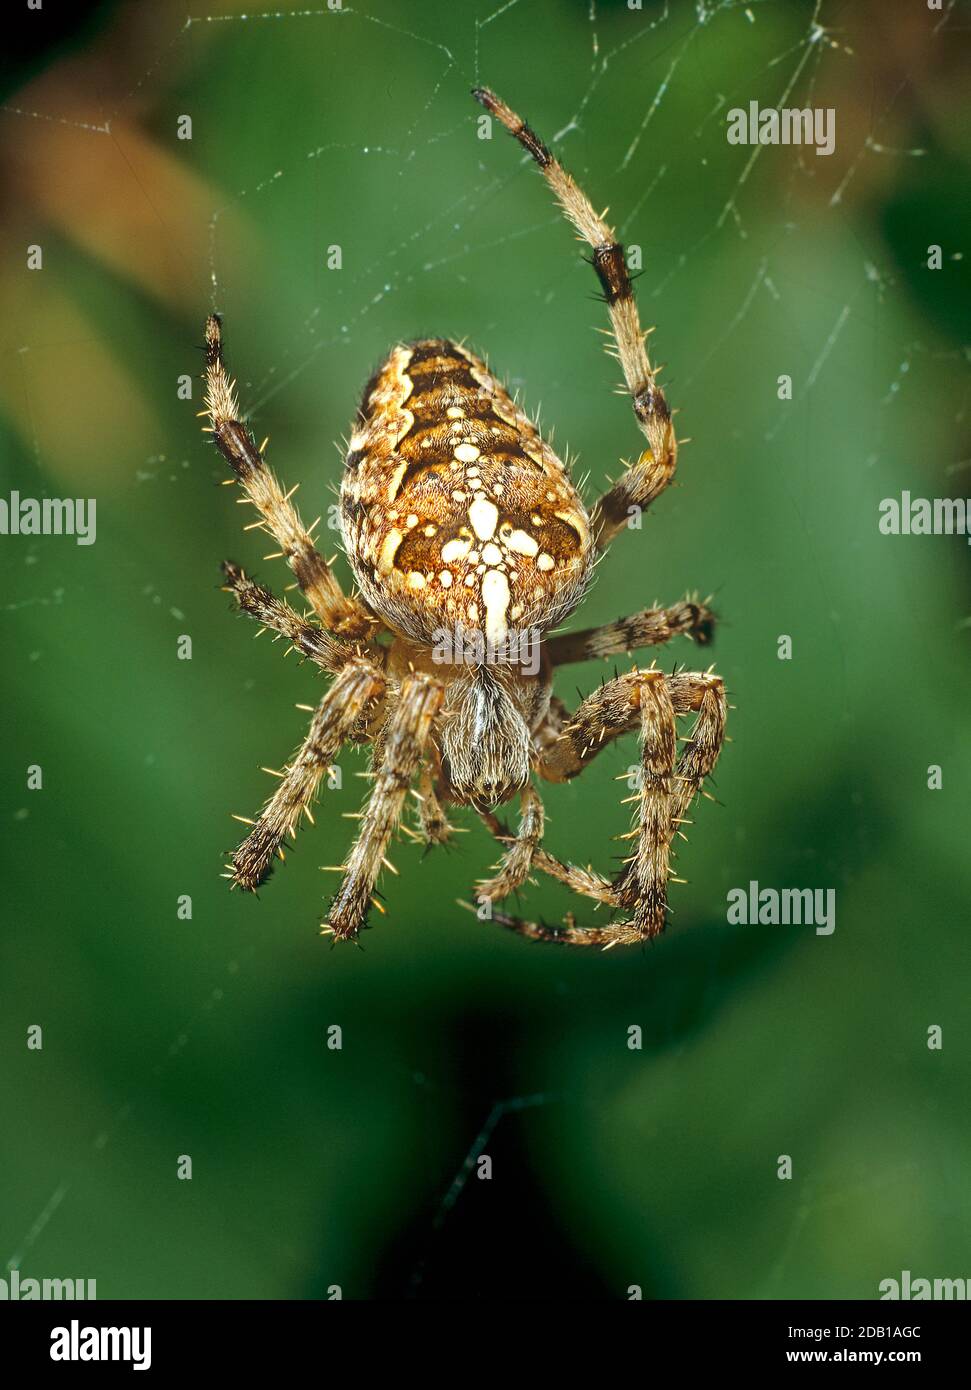 European Garden Spider, Cross Orbweaver, Cross Spider (Araneus diadematus) with white markings on the abdomen. Germany Stock Photo